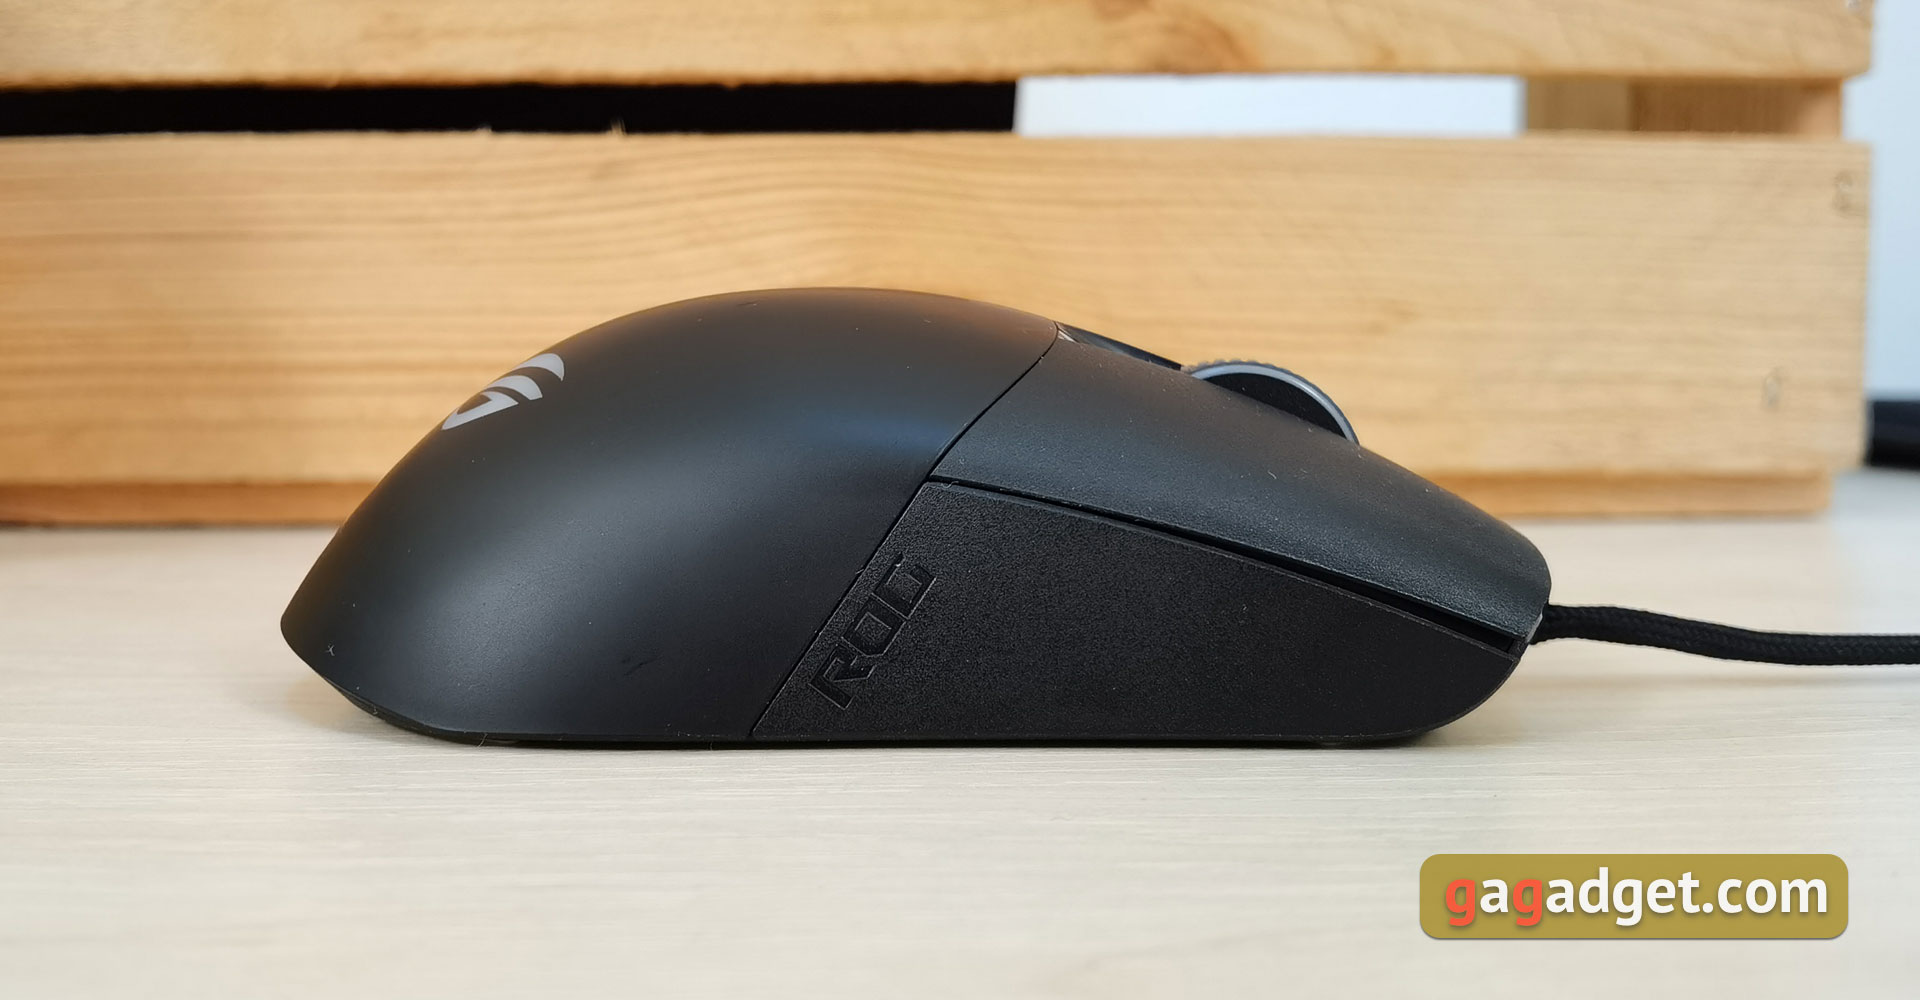 ASUS ROG Keris Review: Ultra-lightweight gaming mouse with responsive sensor-9